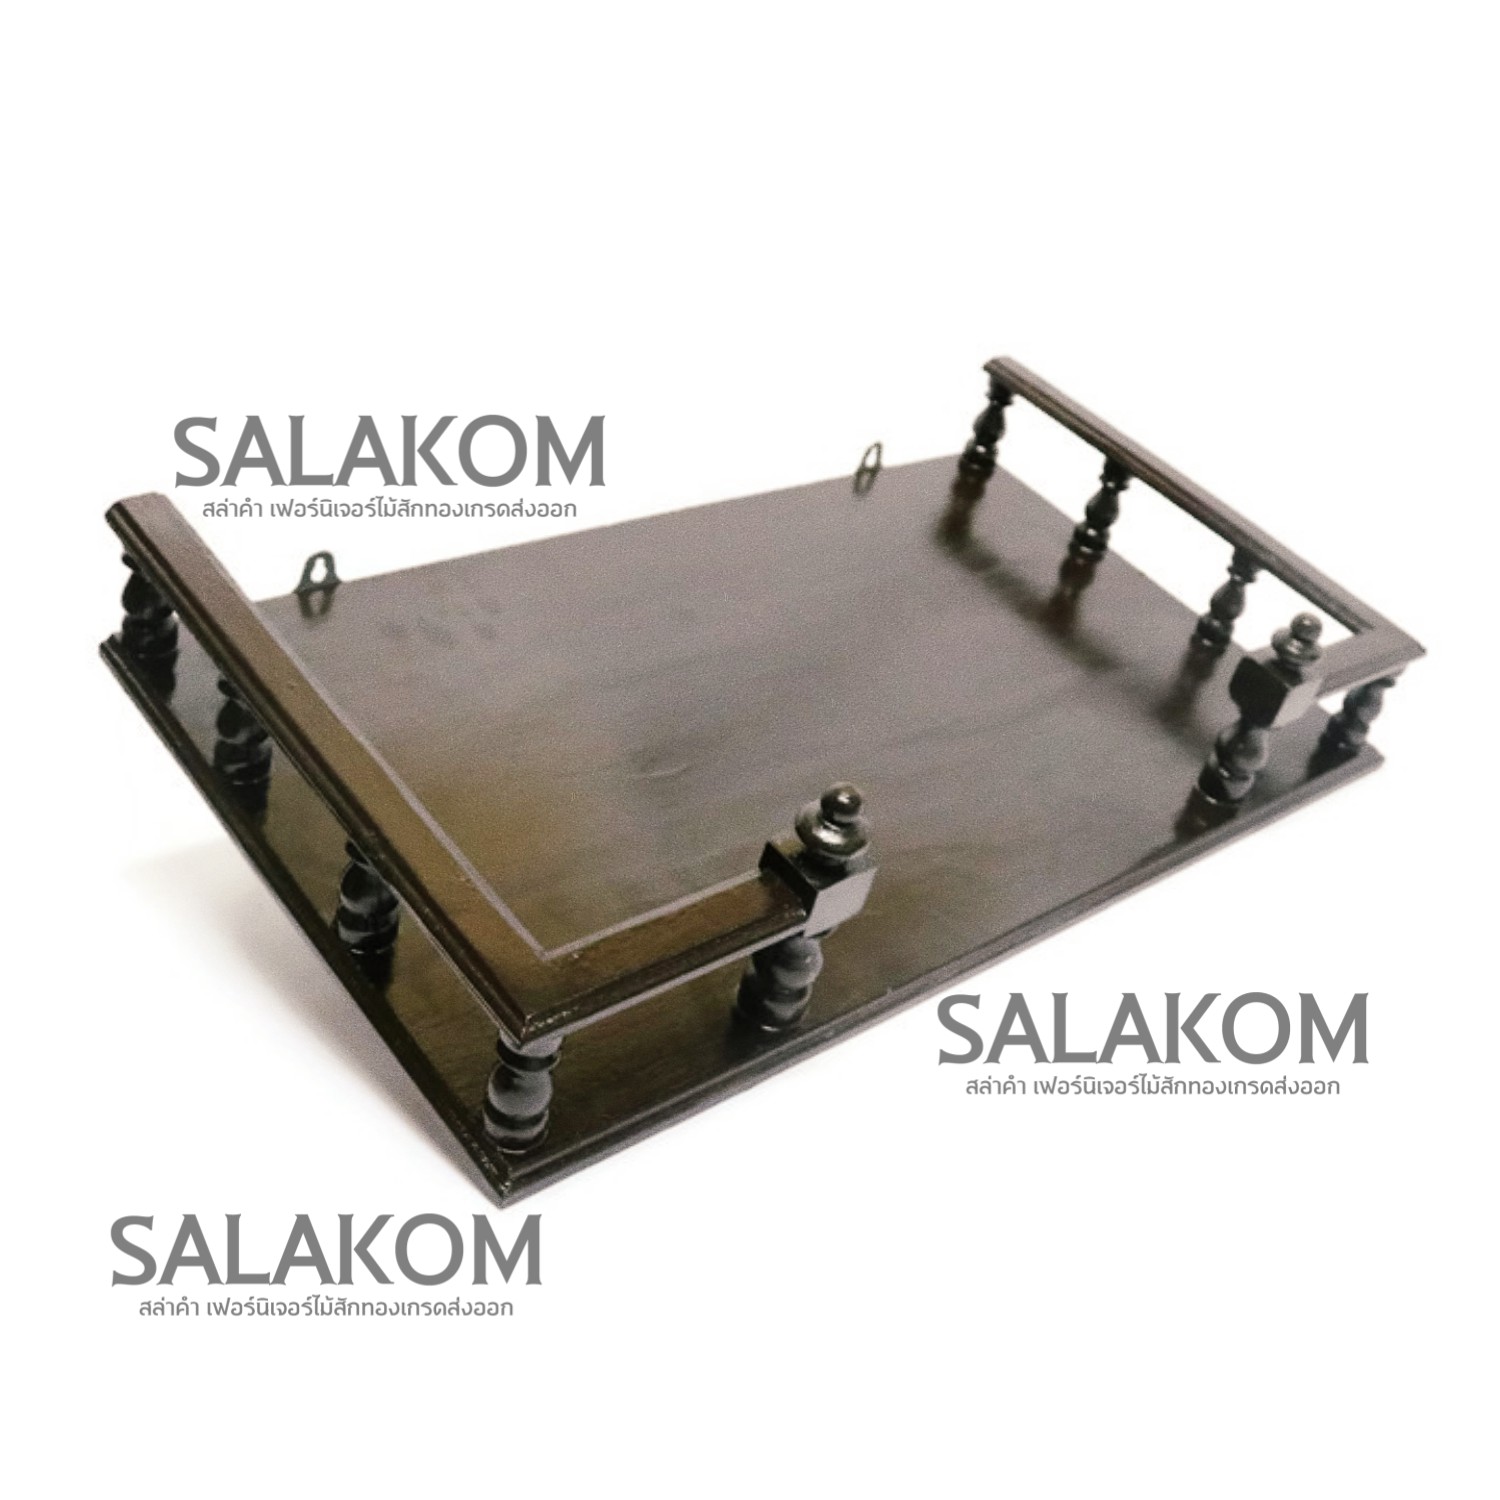 Salakom หิ้งวางพระ ติดผนัง ไม้สักแท้ ขนาด 60*36 เซนต์. สีดำ หน้าเหลี่ยม หิ้งพระไม้สักแขวนผนัง Buddha's shelf